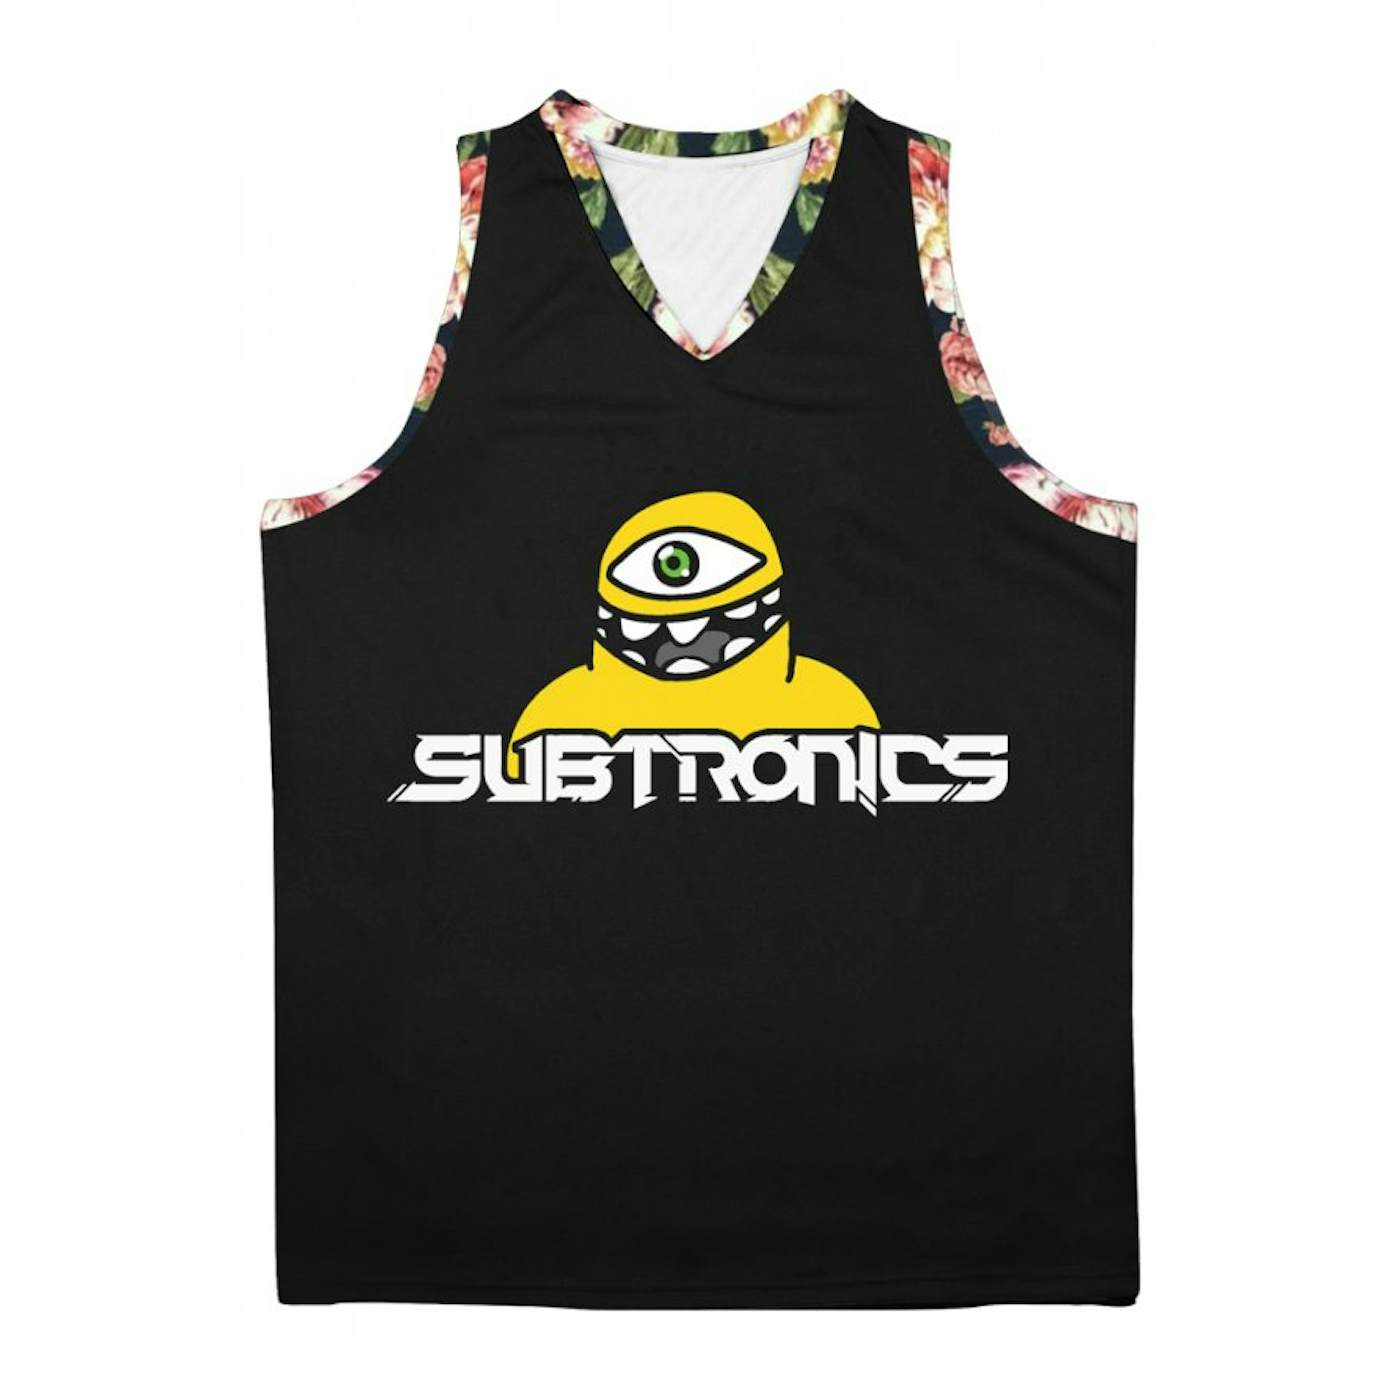 Subtronics Classic Cyclops Basketball Jersey